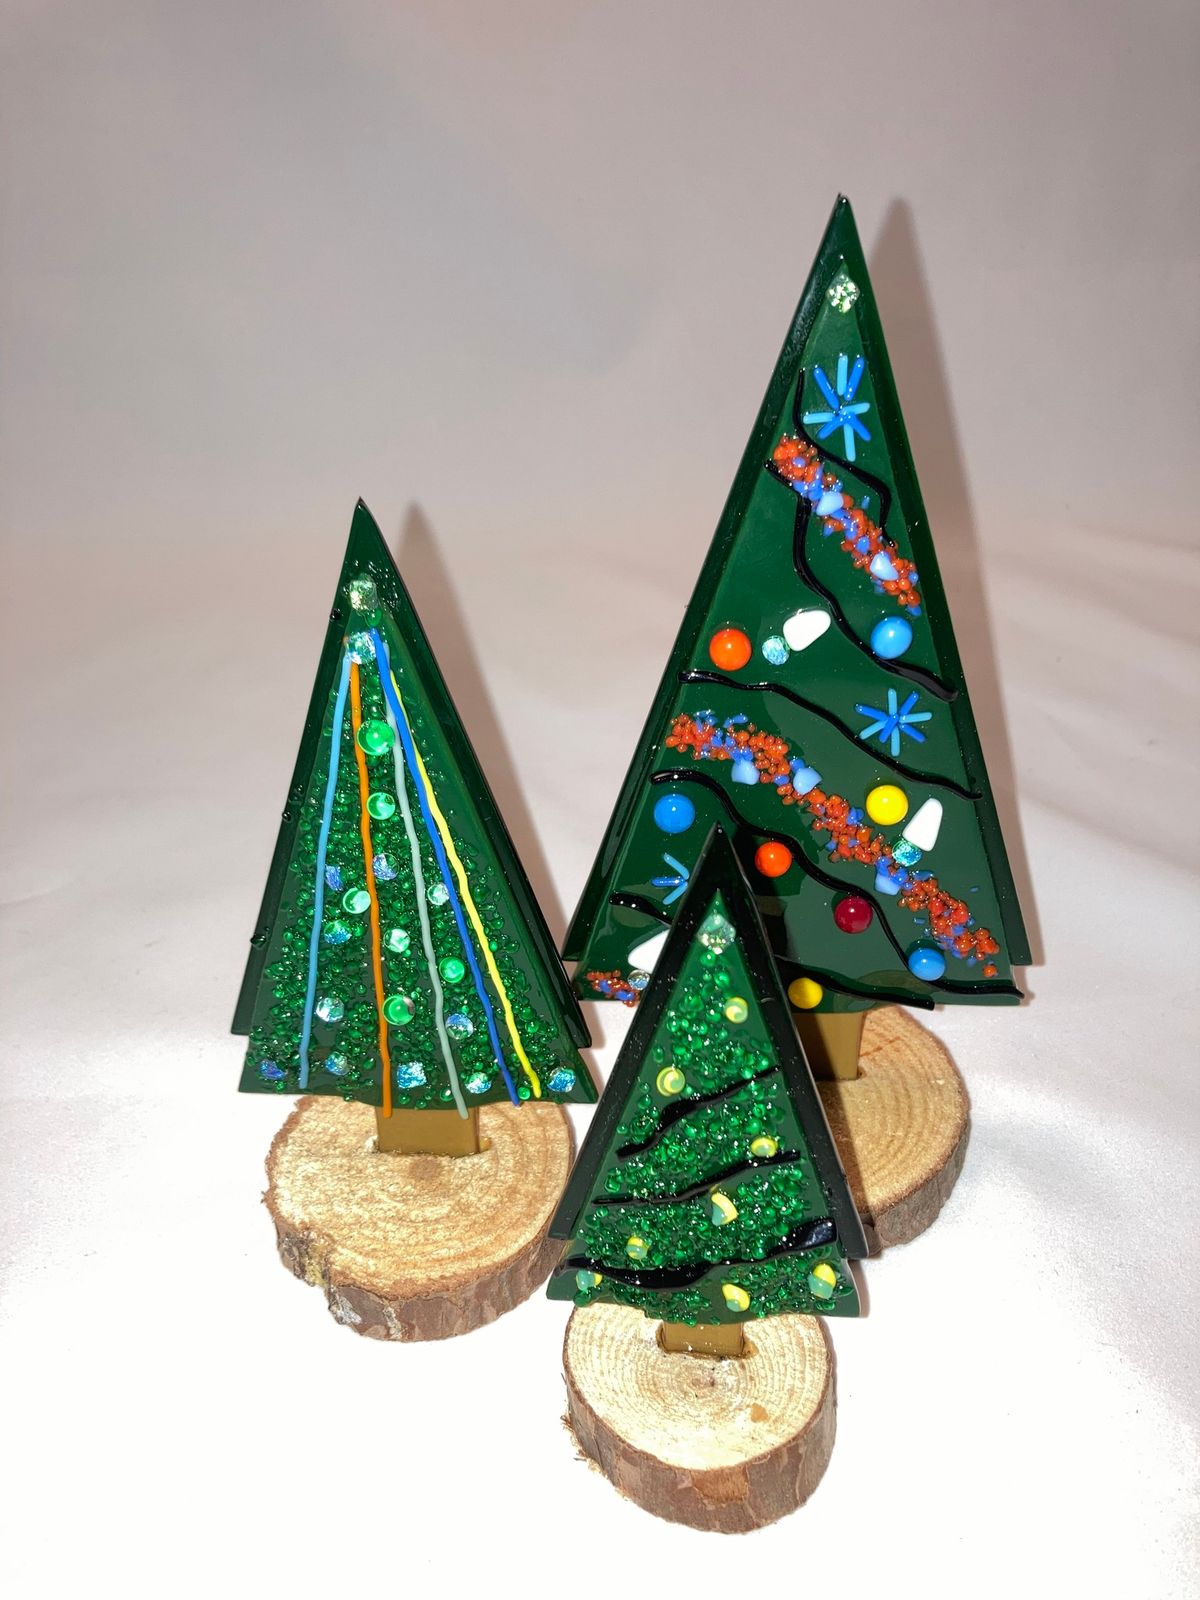 Decorate Three Christmas Trees